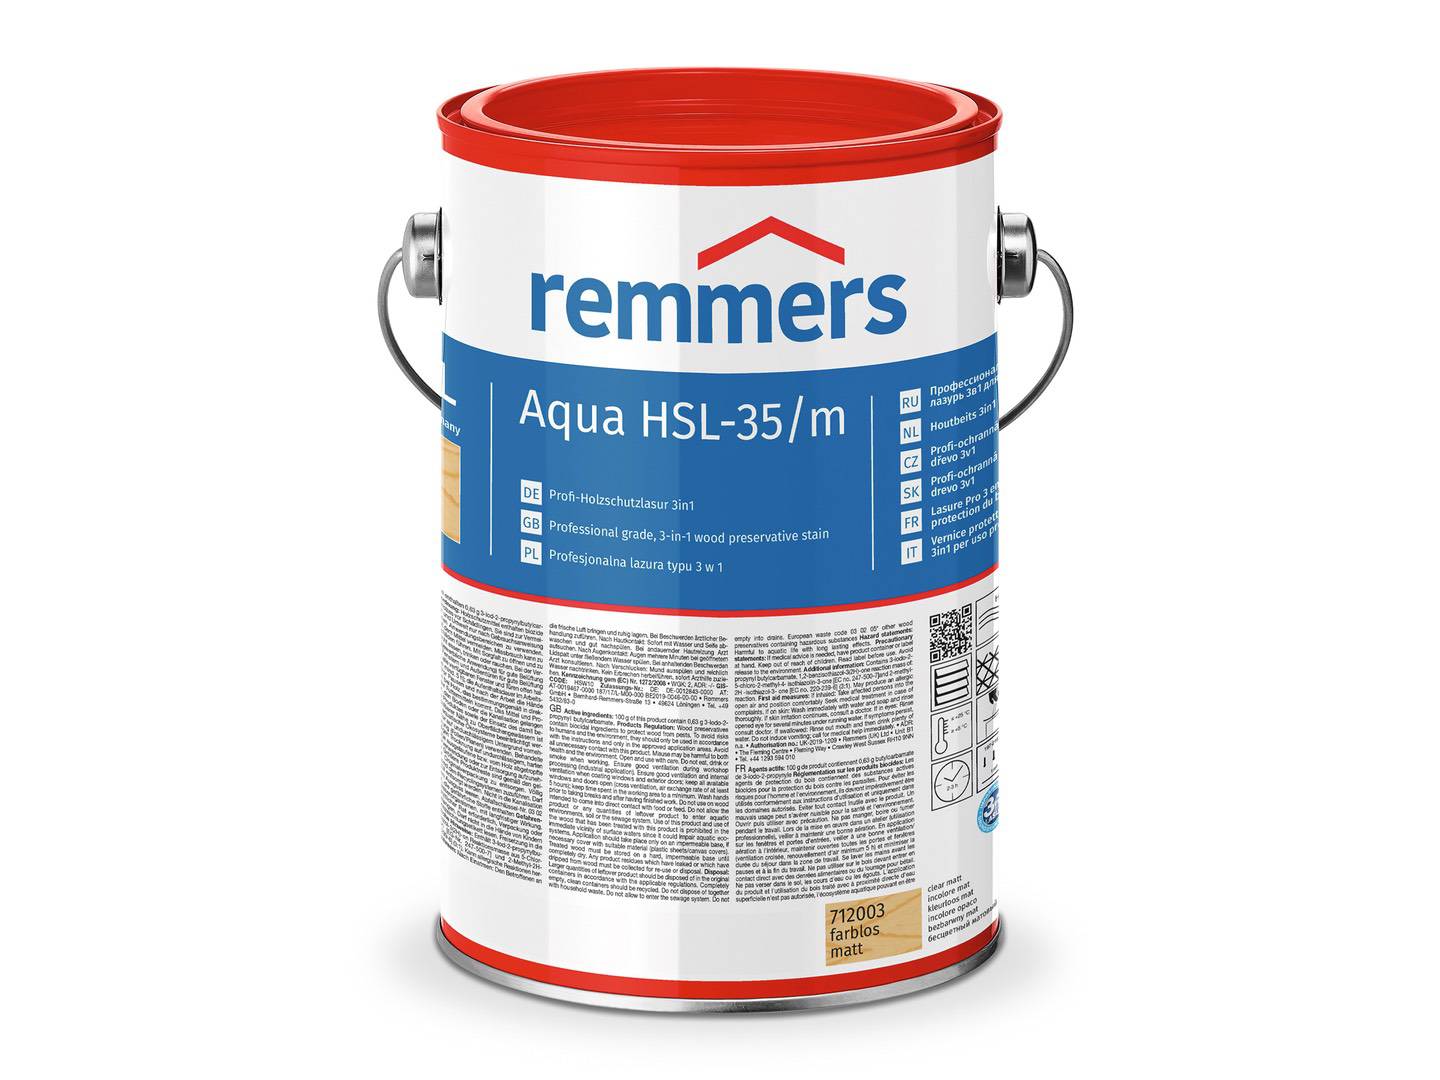 REMMERS Aqua HSL-35/m-Profi-Holzschutz-Lasur 3in1 teak (RC-545) 2,50 l